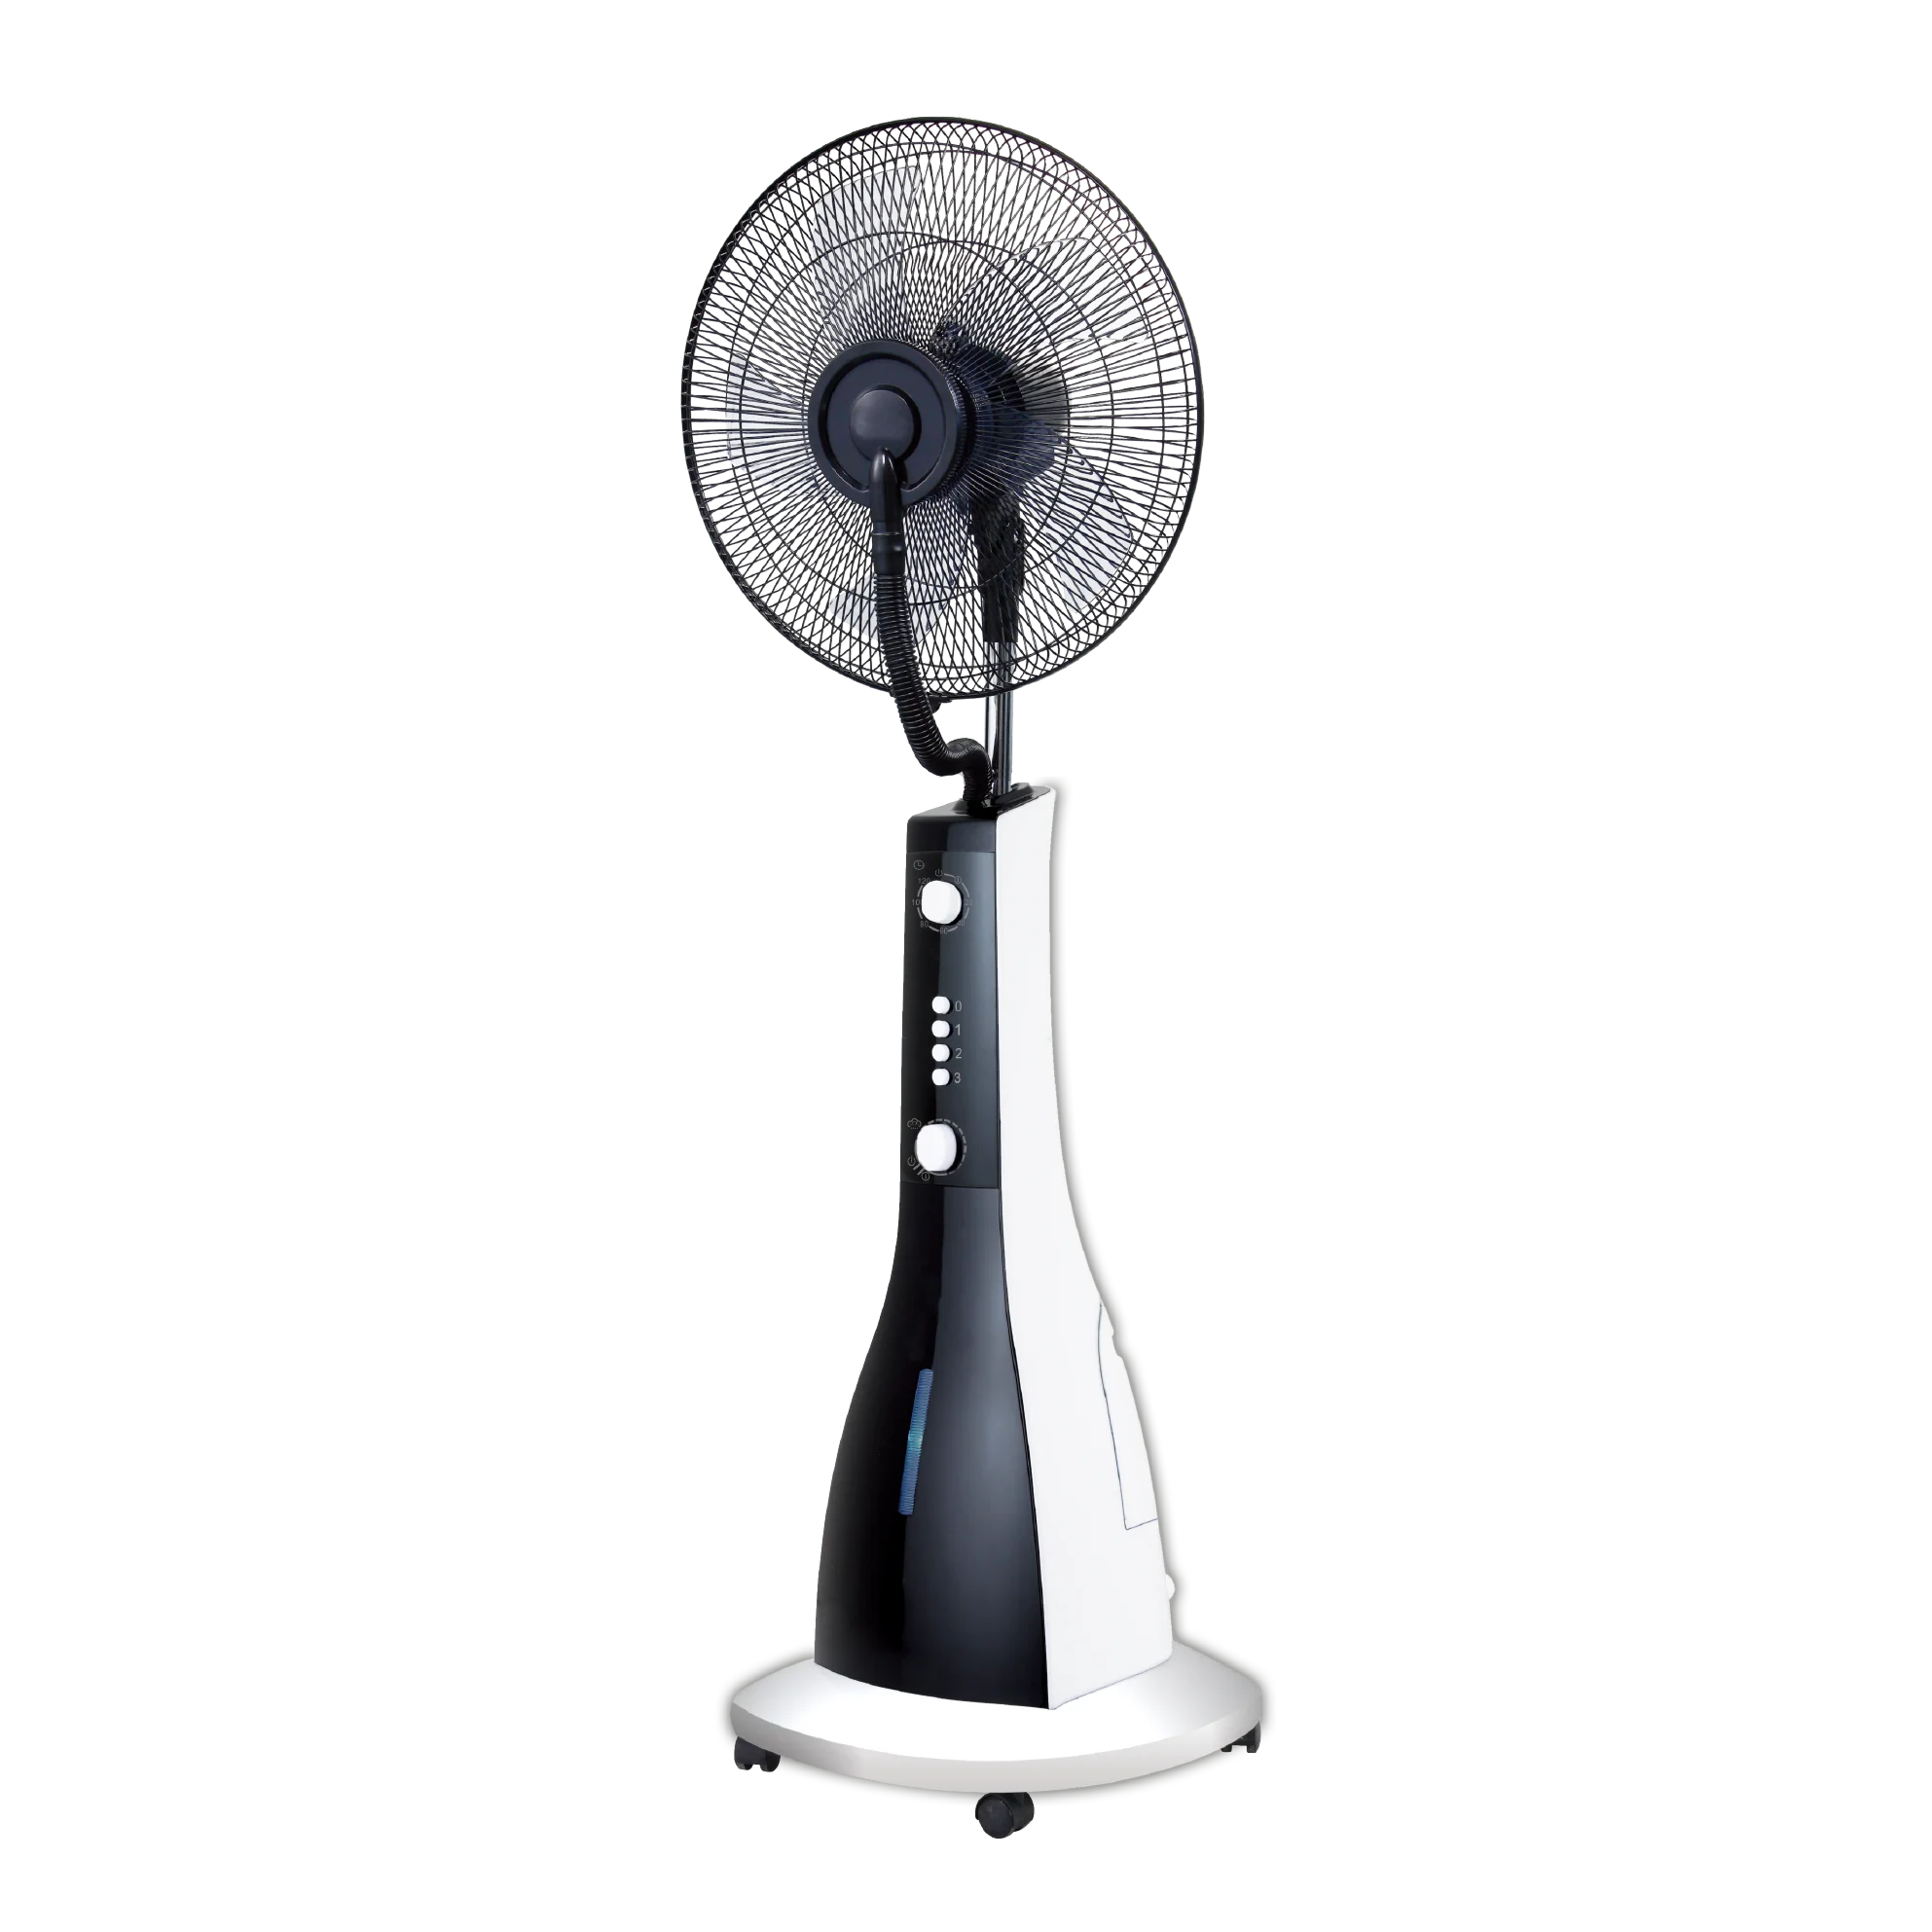 
2019 Ventilador Water Cooling Mist Fan  (62087757774)